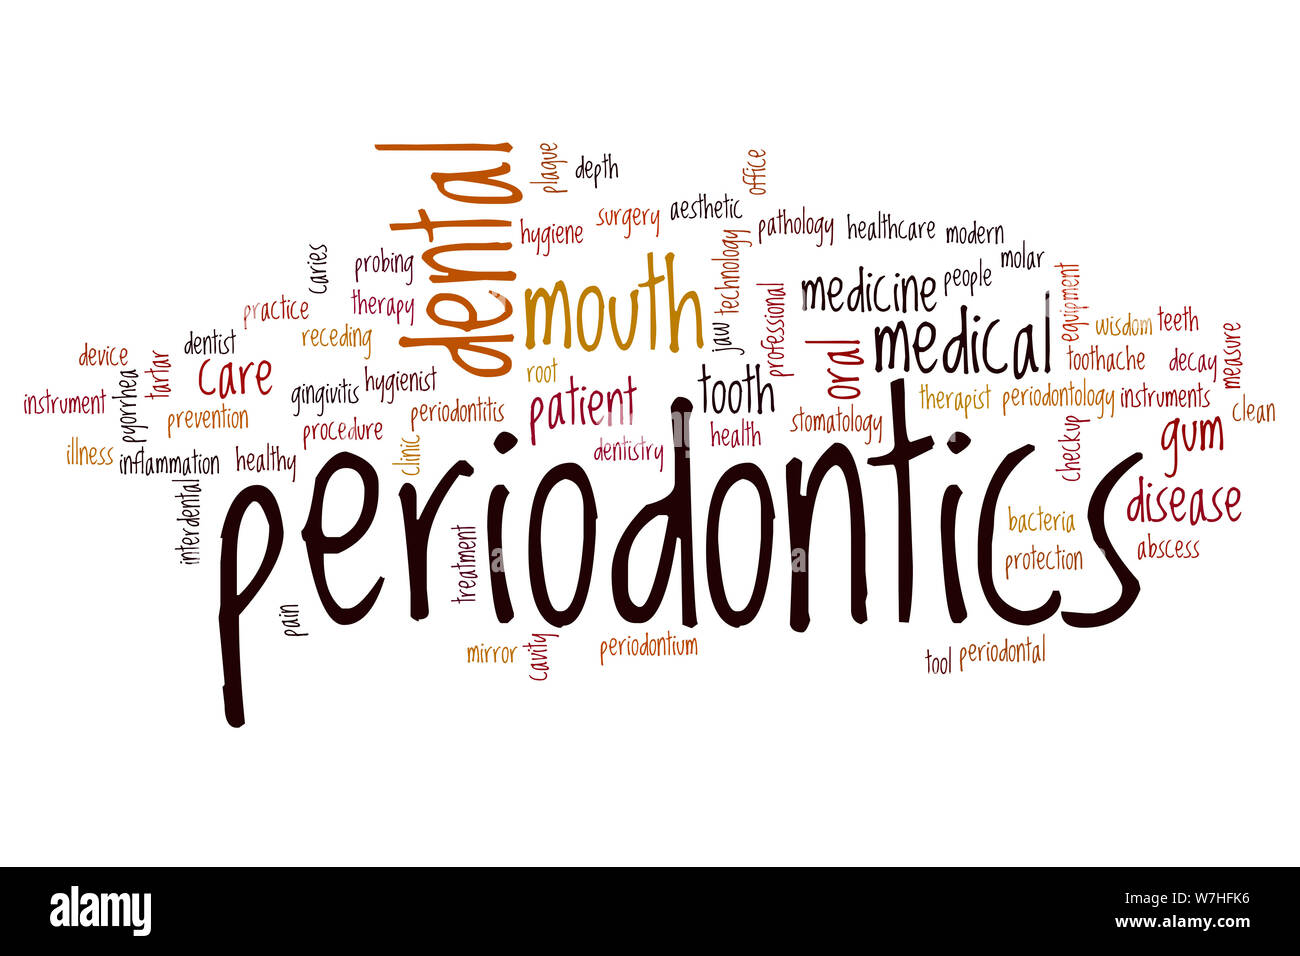 Periodontics word cloud concept Stock Photo